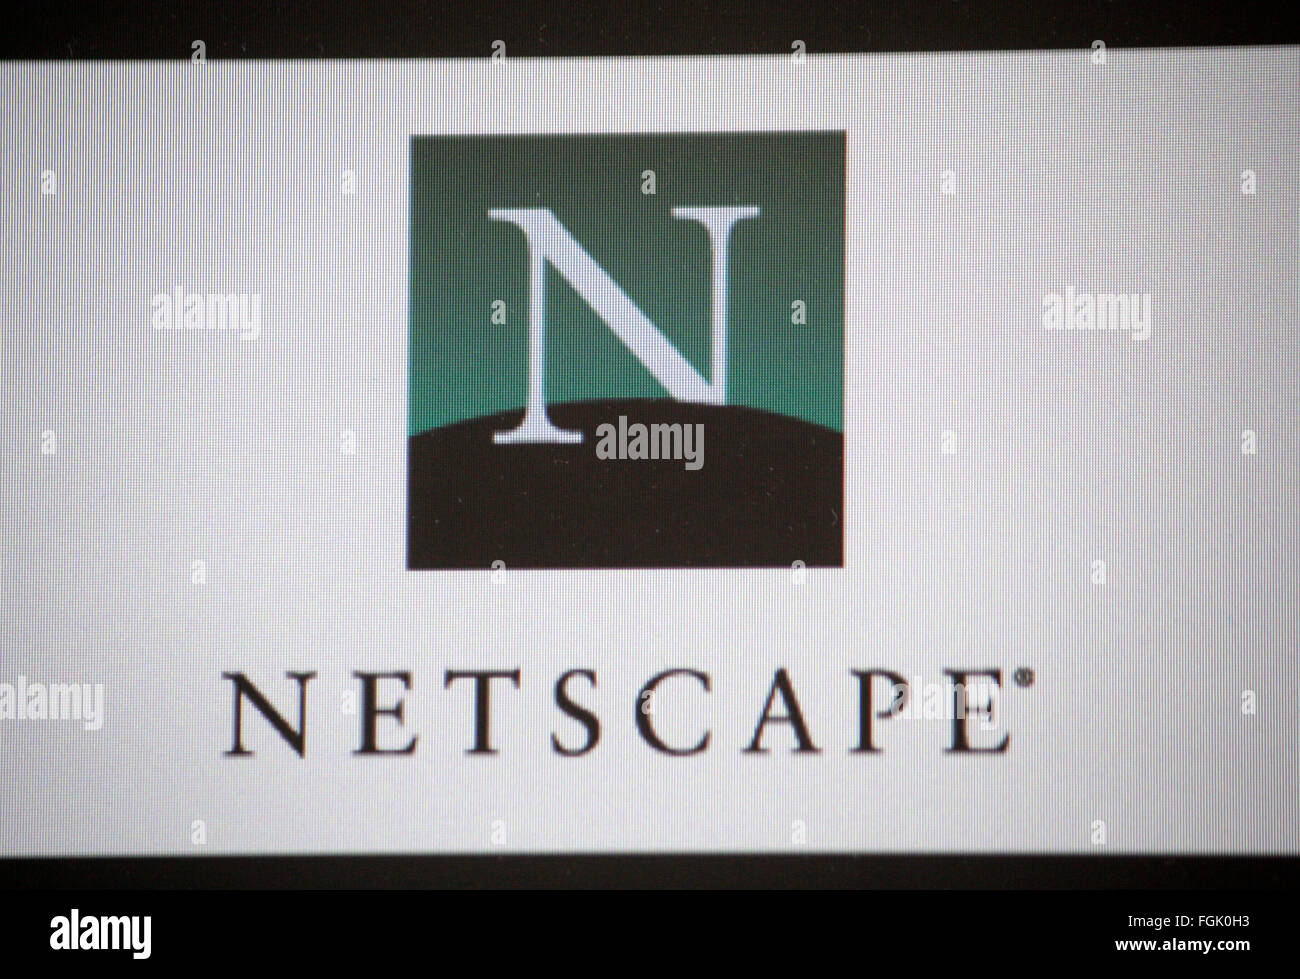 Markenname: 'Netscape', Berlin. Stock Photo